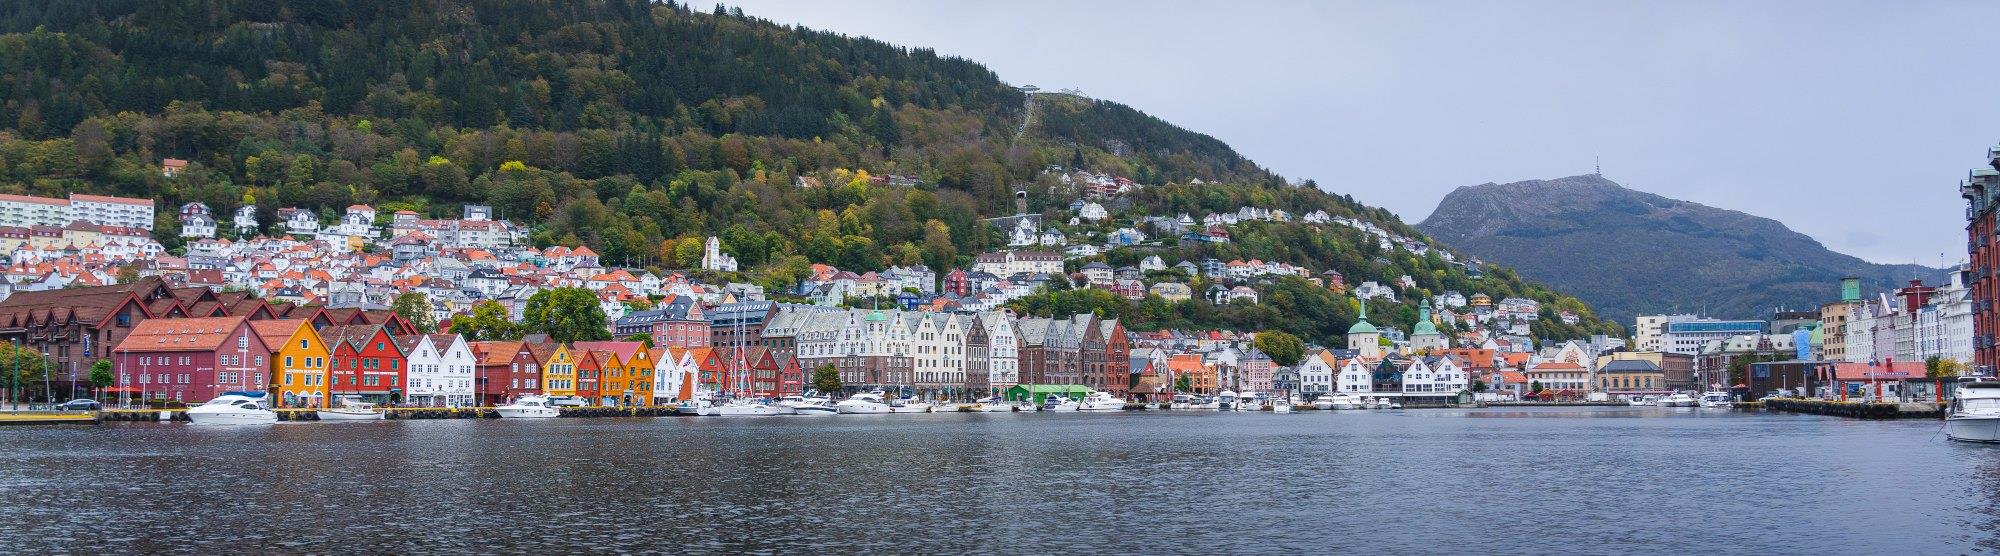 Where is Bergen? - visitBergen.com